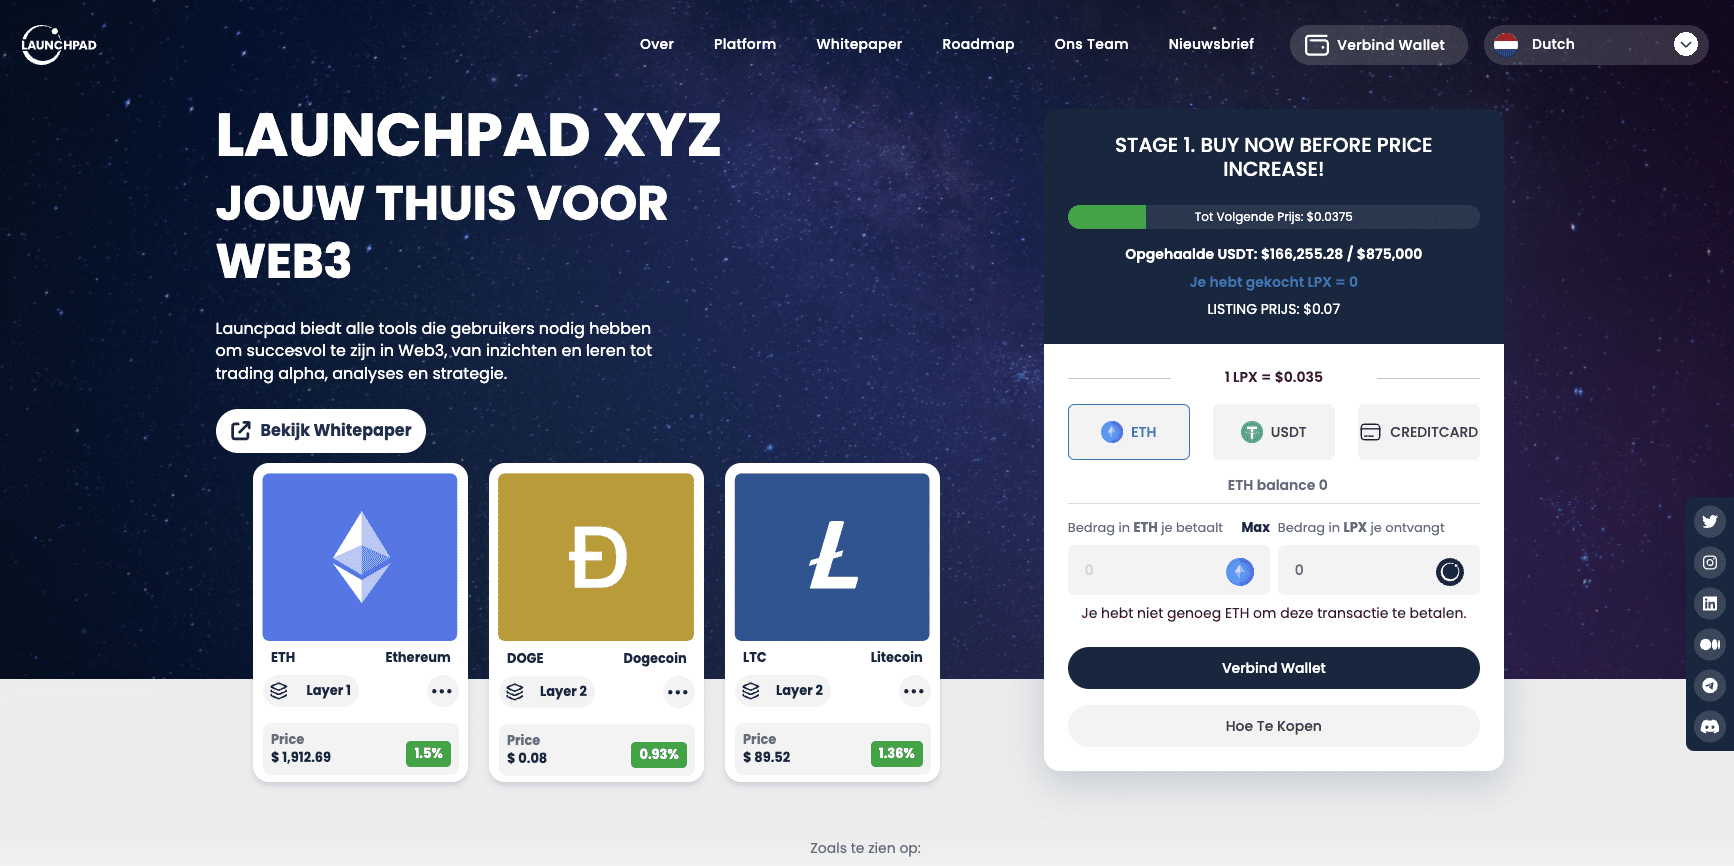 launchpad xyz web3 platform waar je kan zien welke crypto je moet kopen